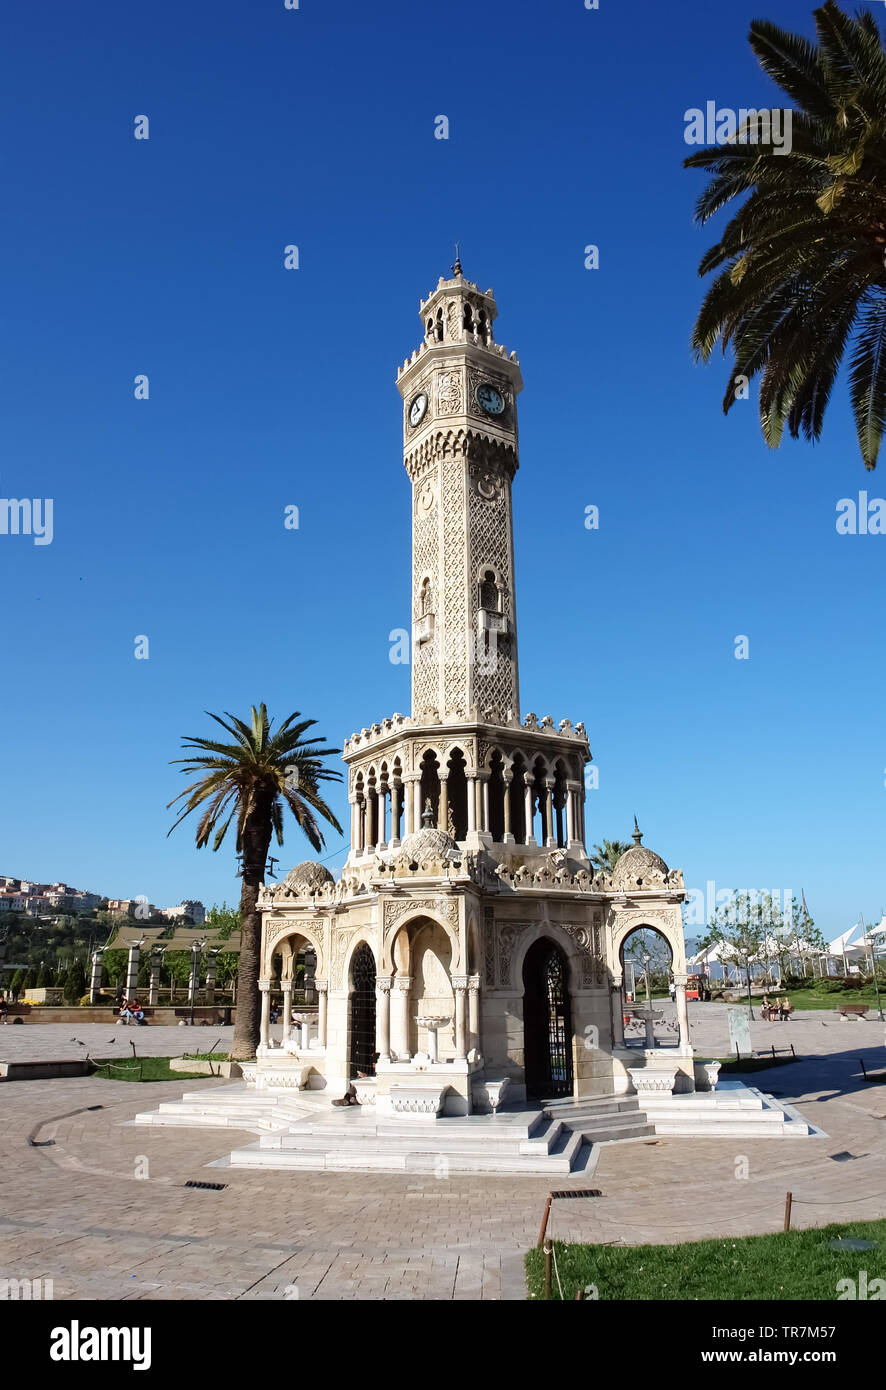 Izmir, Turkey - April 22, 2012: The Clock Tower (Saat Kulesi) on Konak Square in the center of Izmir on a sunny morning, Turkey. Stock Photo